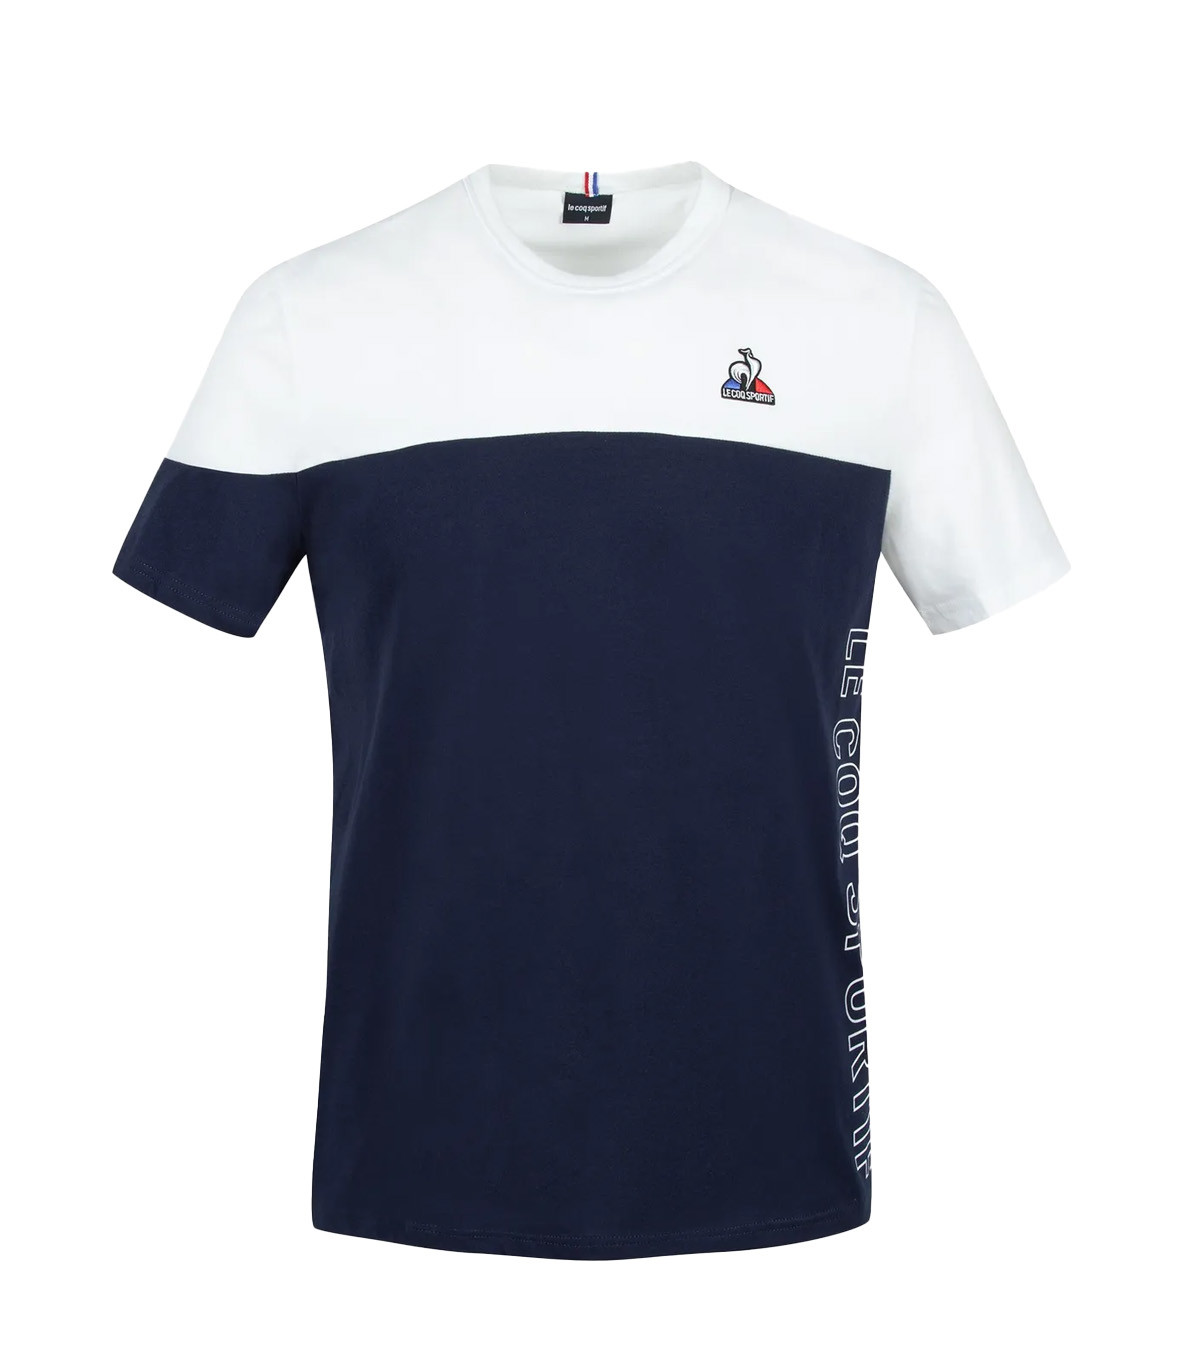 Le Coq Sportif - Camiseta Saison Ble